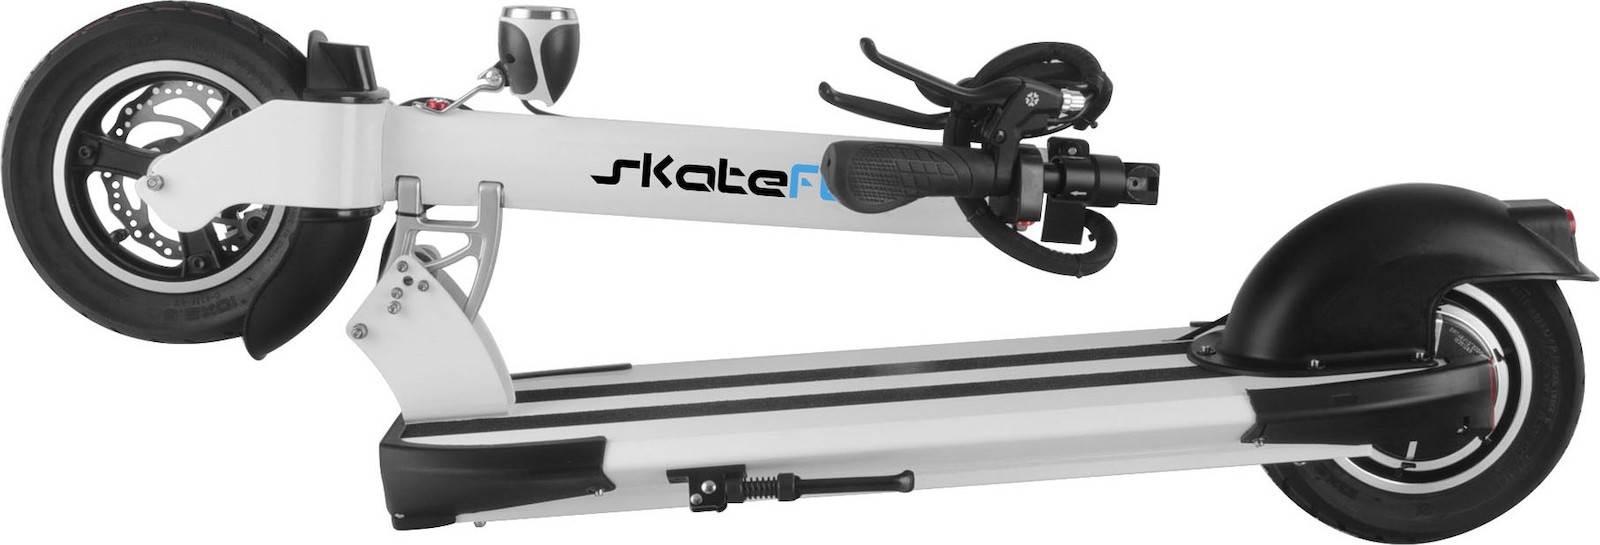 Skateflash SK Urban 3.0 Ηλεκτρικο Πατινι με 40km/h max Ταχυτητα και 35km Αυτονομια